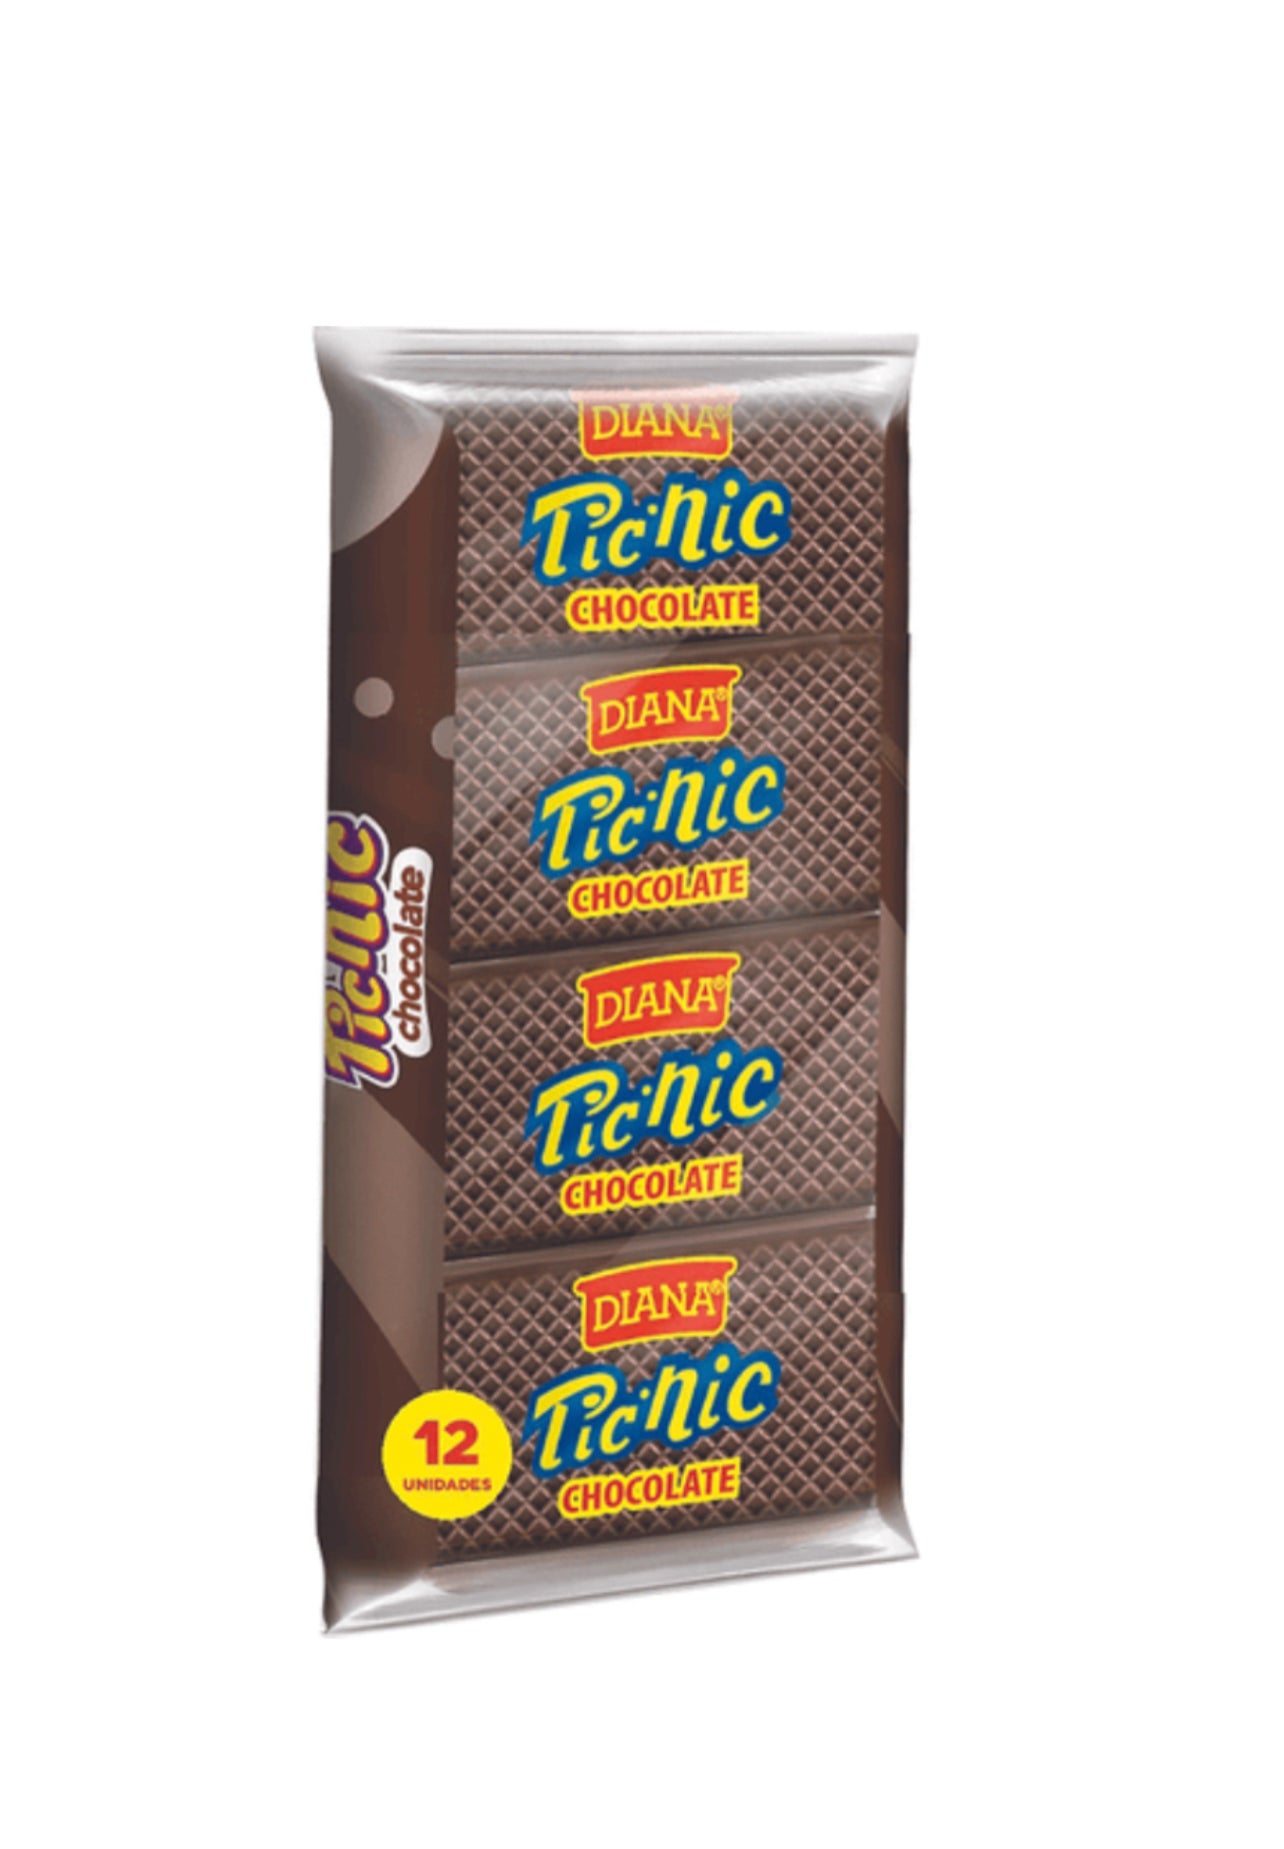 Diana Picnic Chocolate Sugar Wafers, 0.60 oz, 12 count